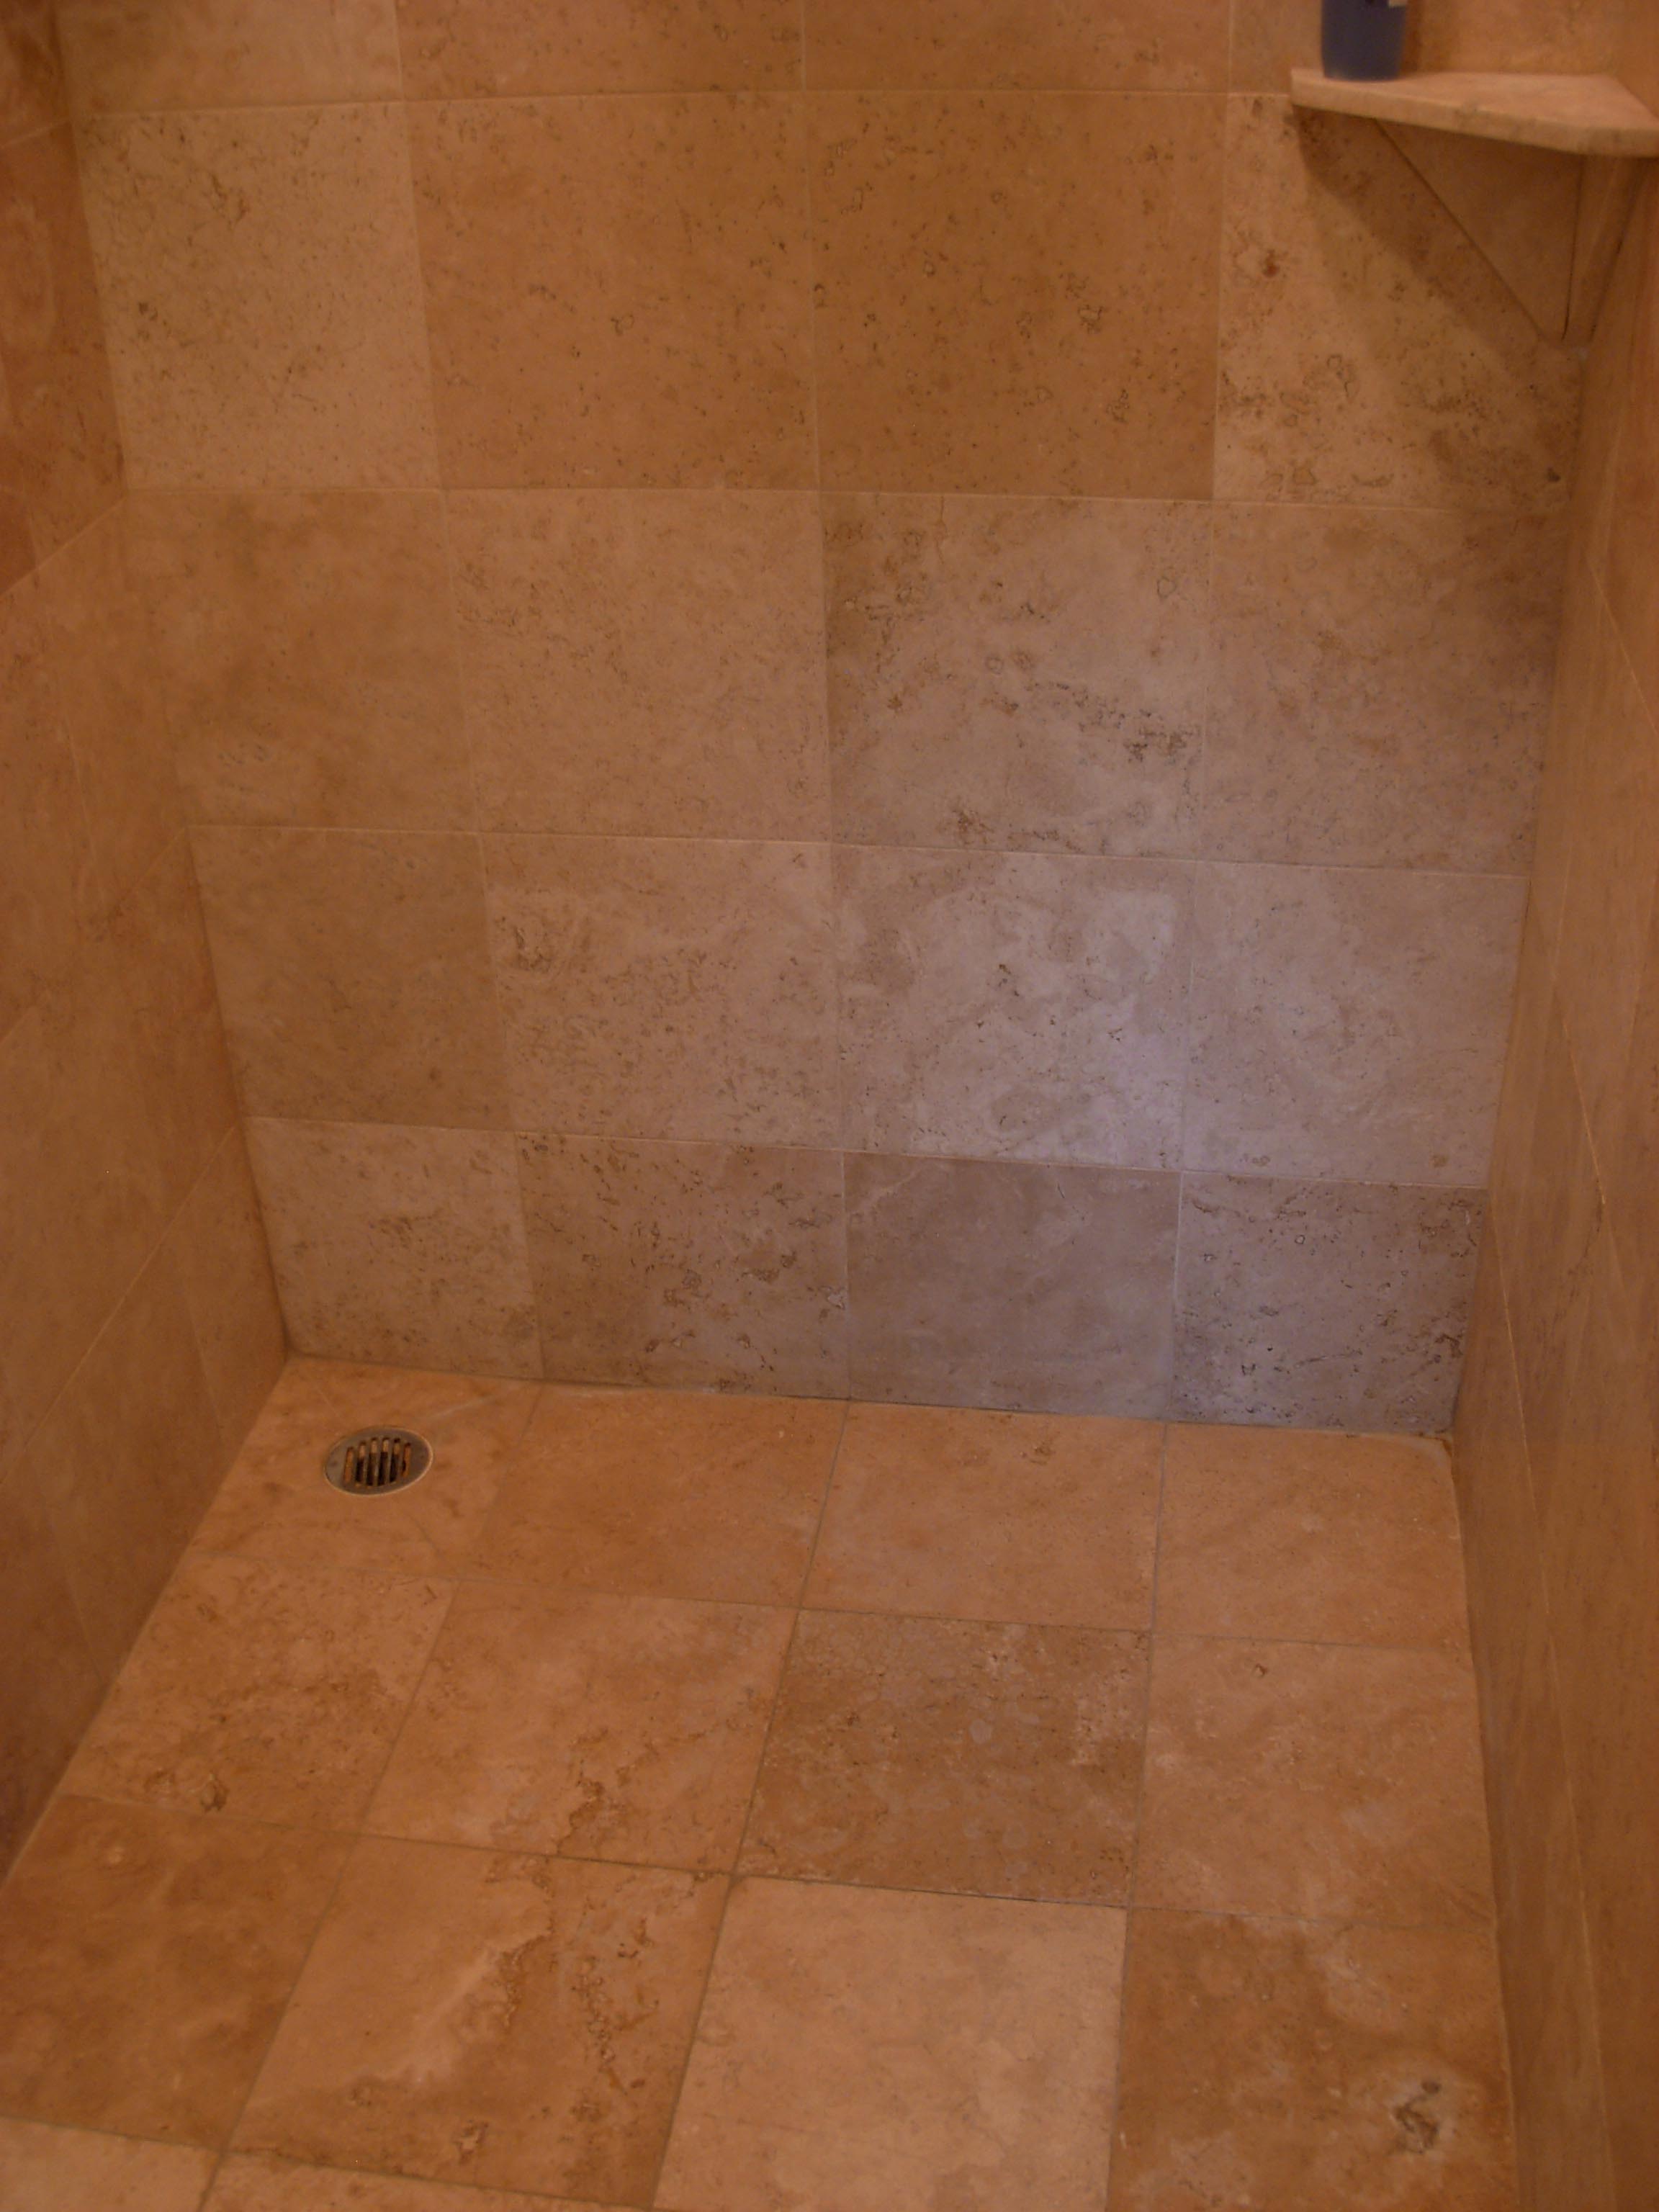 existing tile shower stall